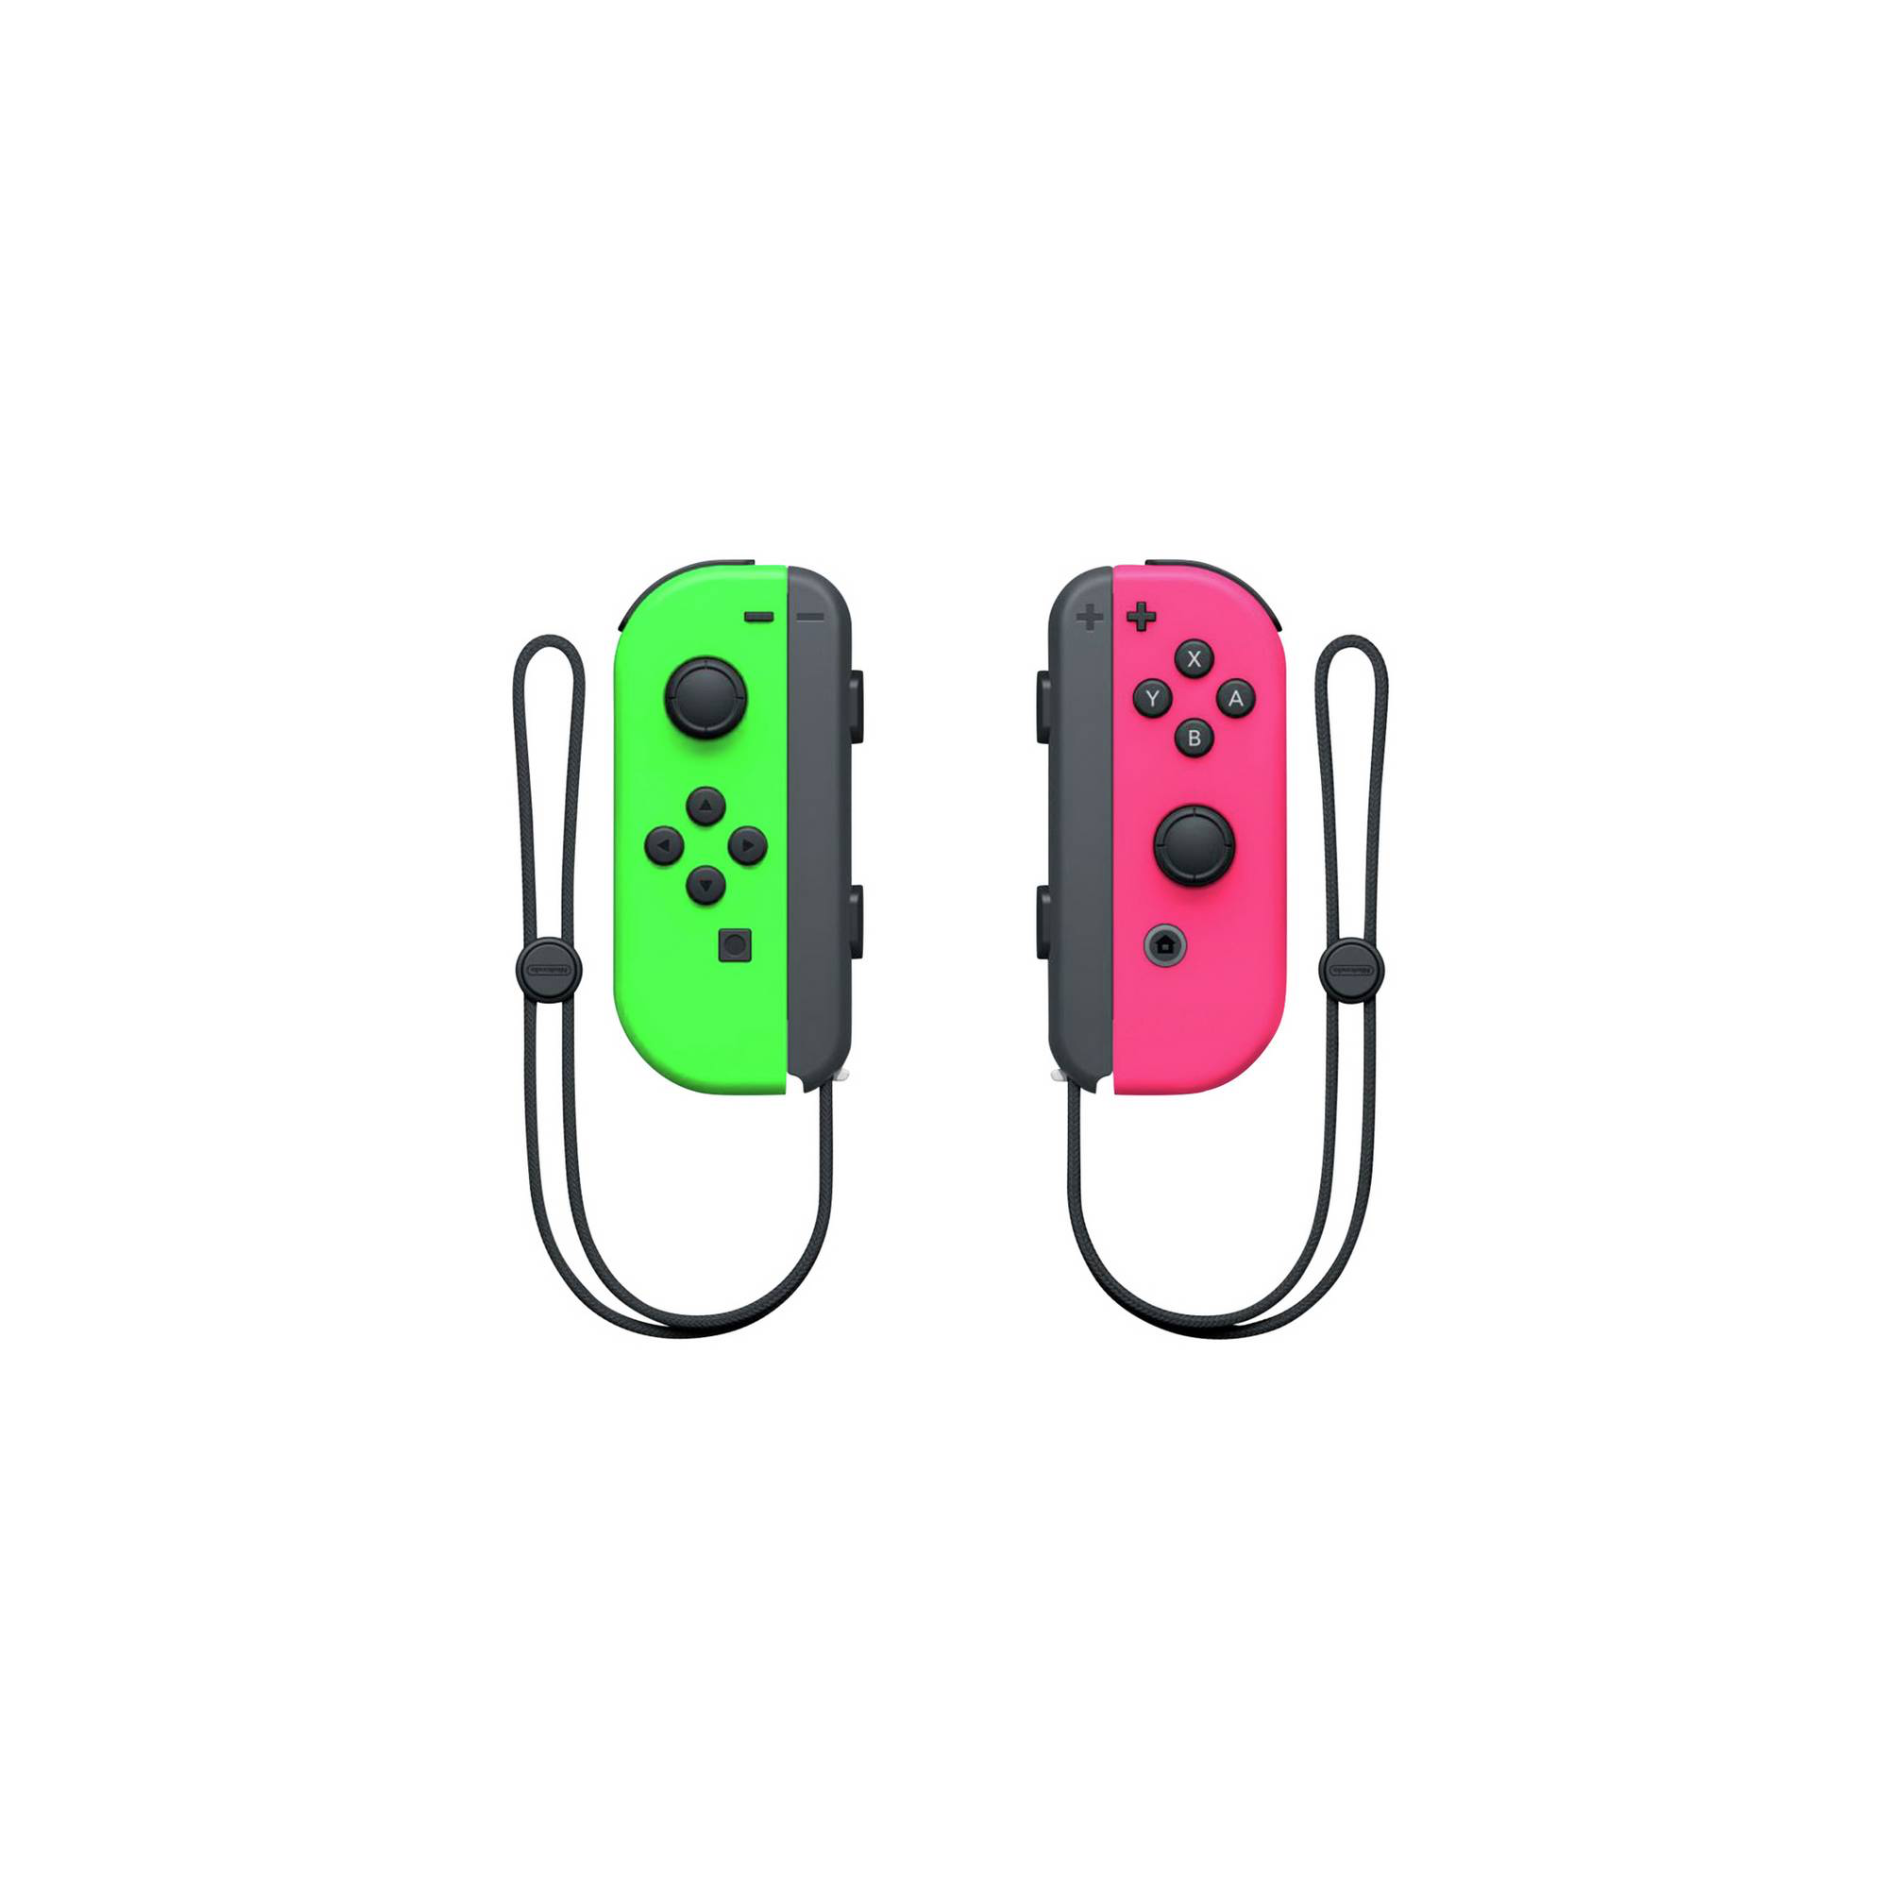 Nintendo Switch Joy-Con Controller (Neon Green/Neon Pink) Pair